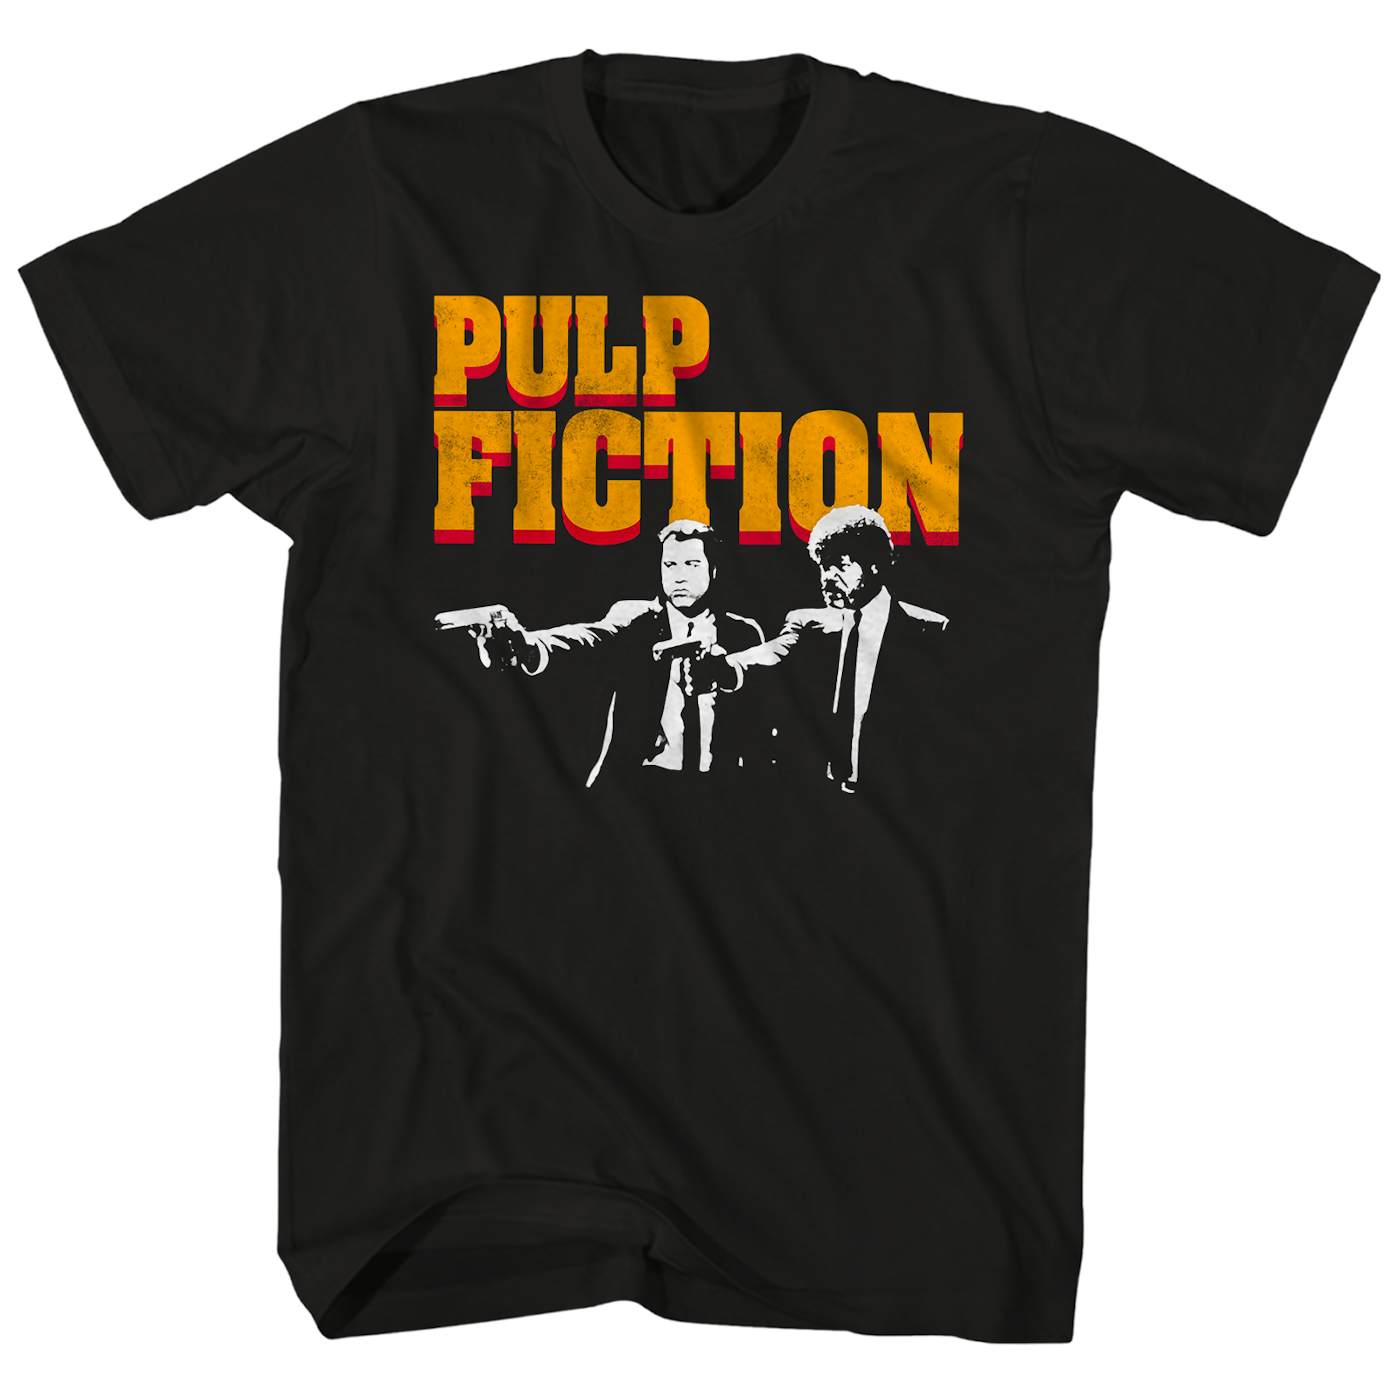 Pulp Fiction T-Shirt | B&W Jules and Vincent With Guns Pulp Fiction Shirt